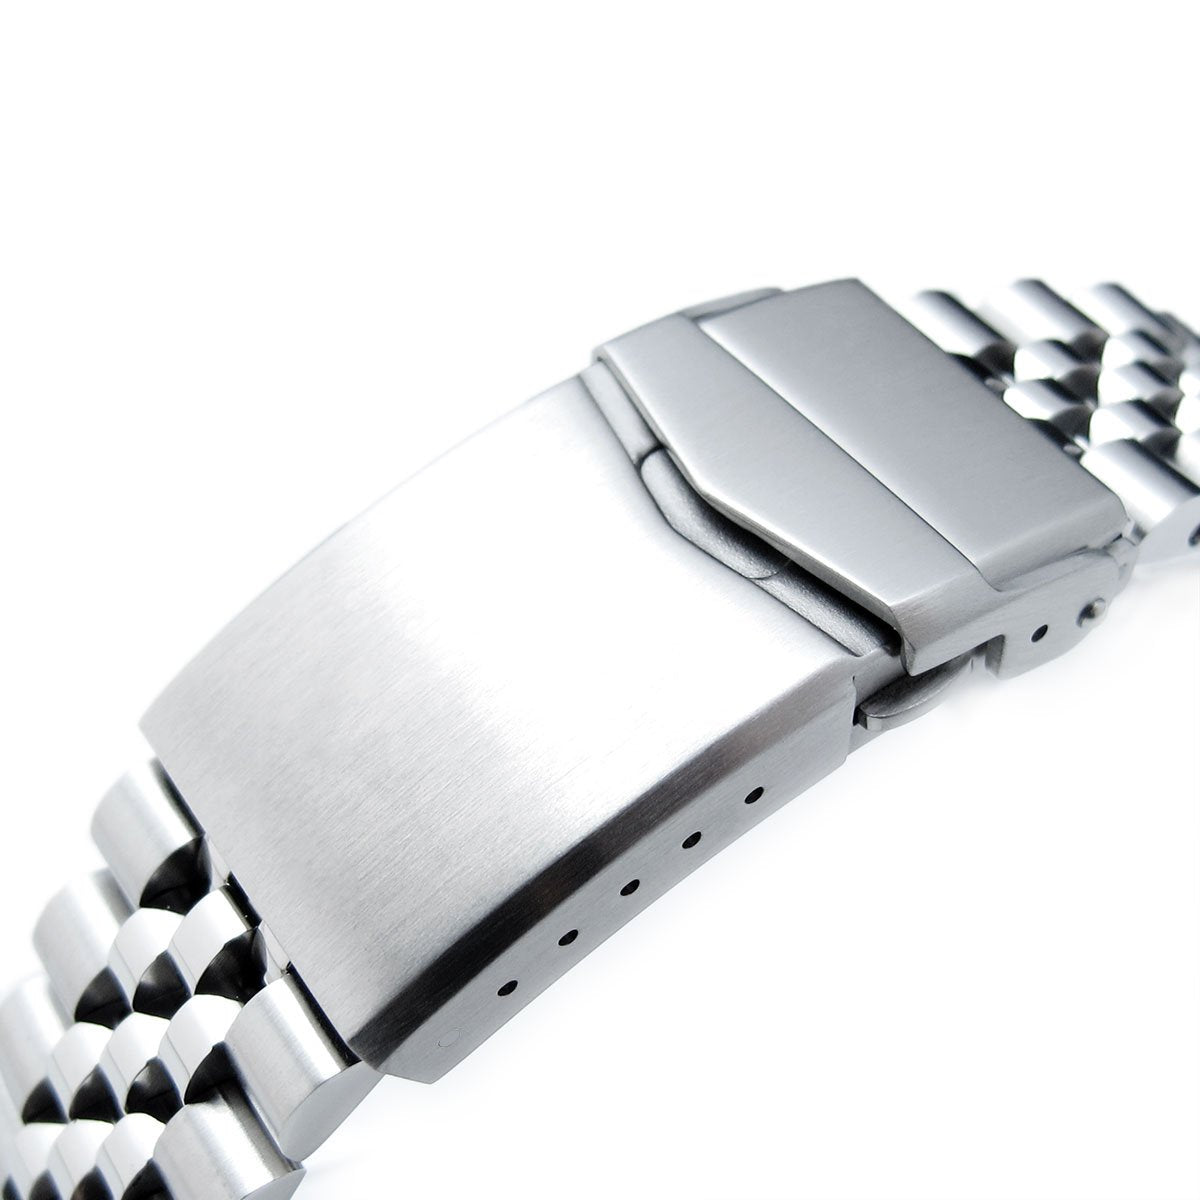 20mm Super-J Louis 316L Stainless Steel Watch Bracelet for Seiko SKX013, V-Clasp Brushed